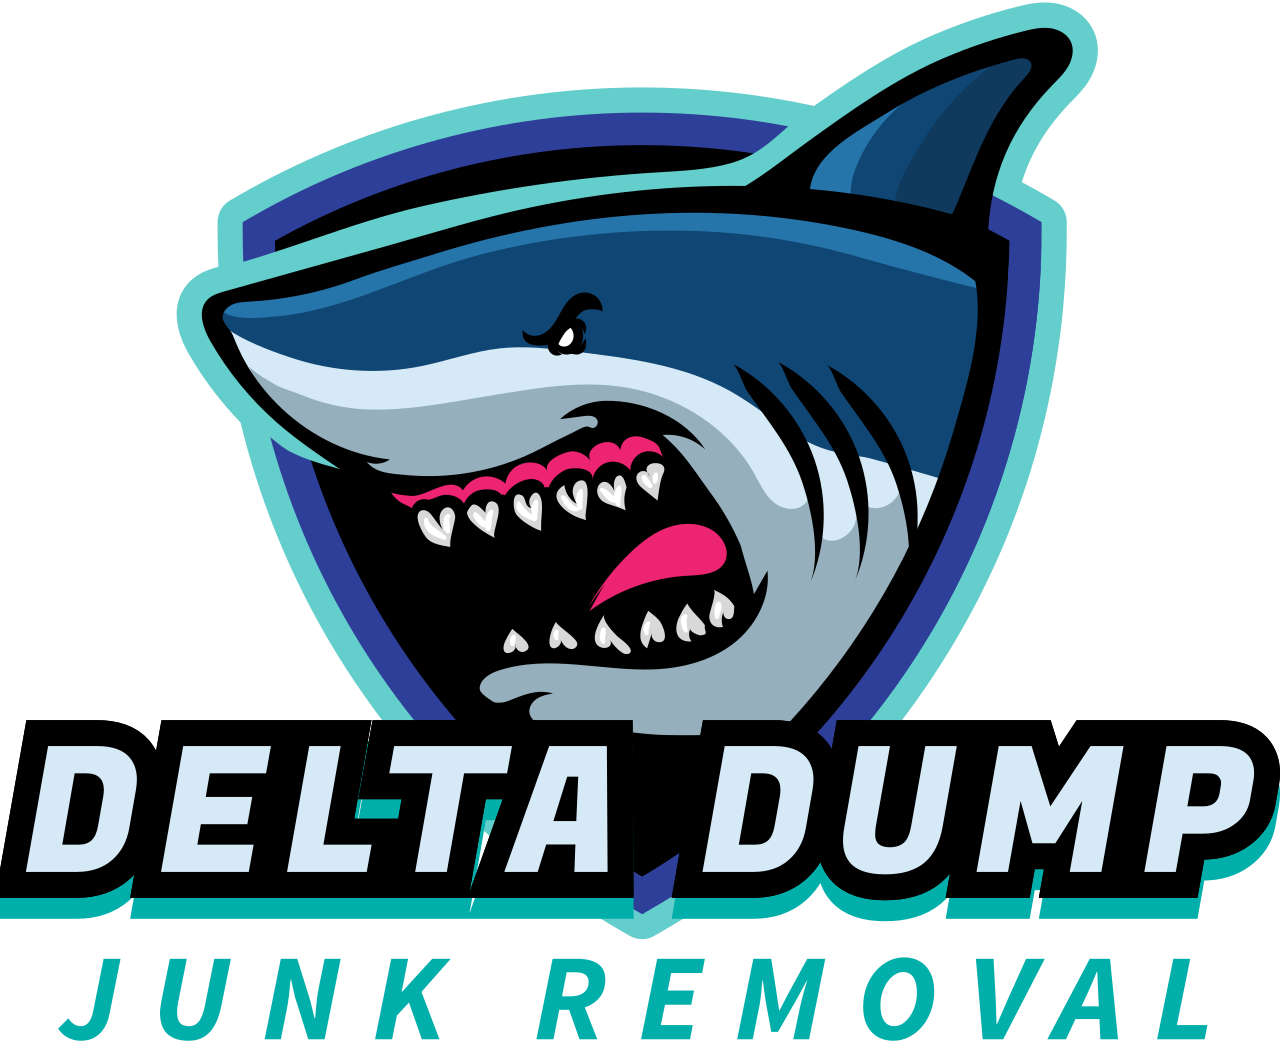 delta dump's logo